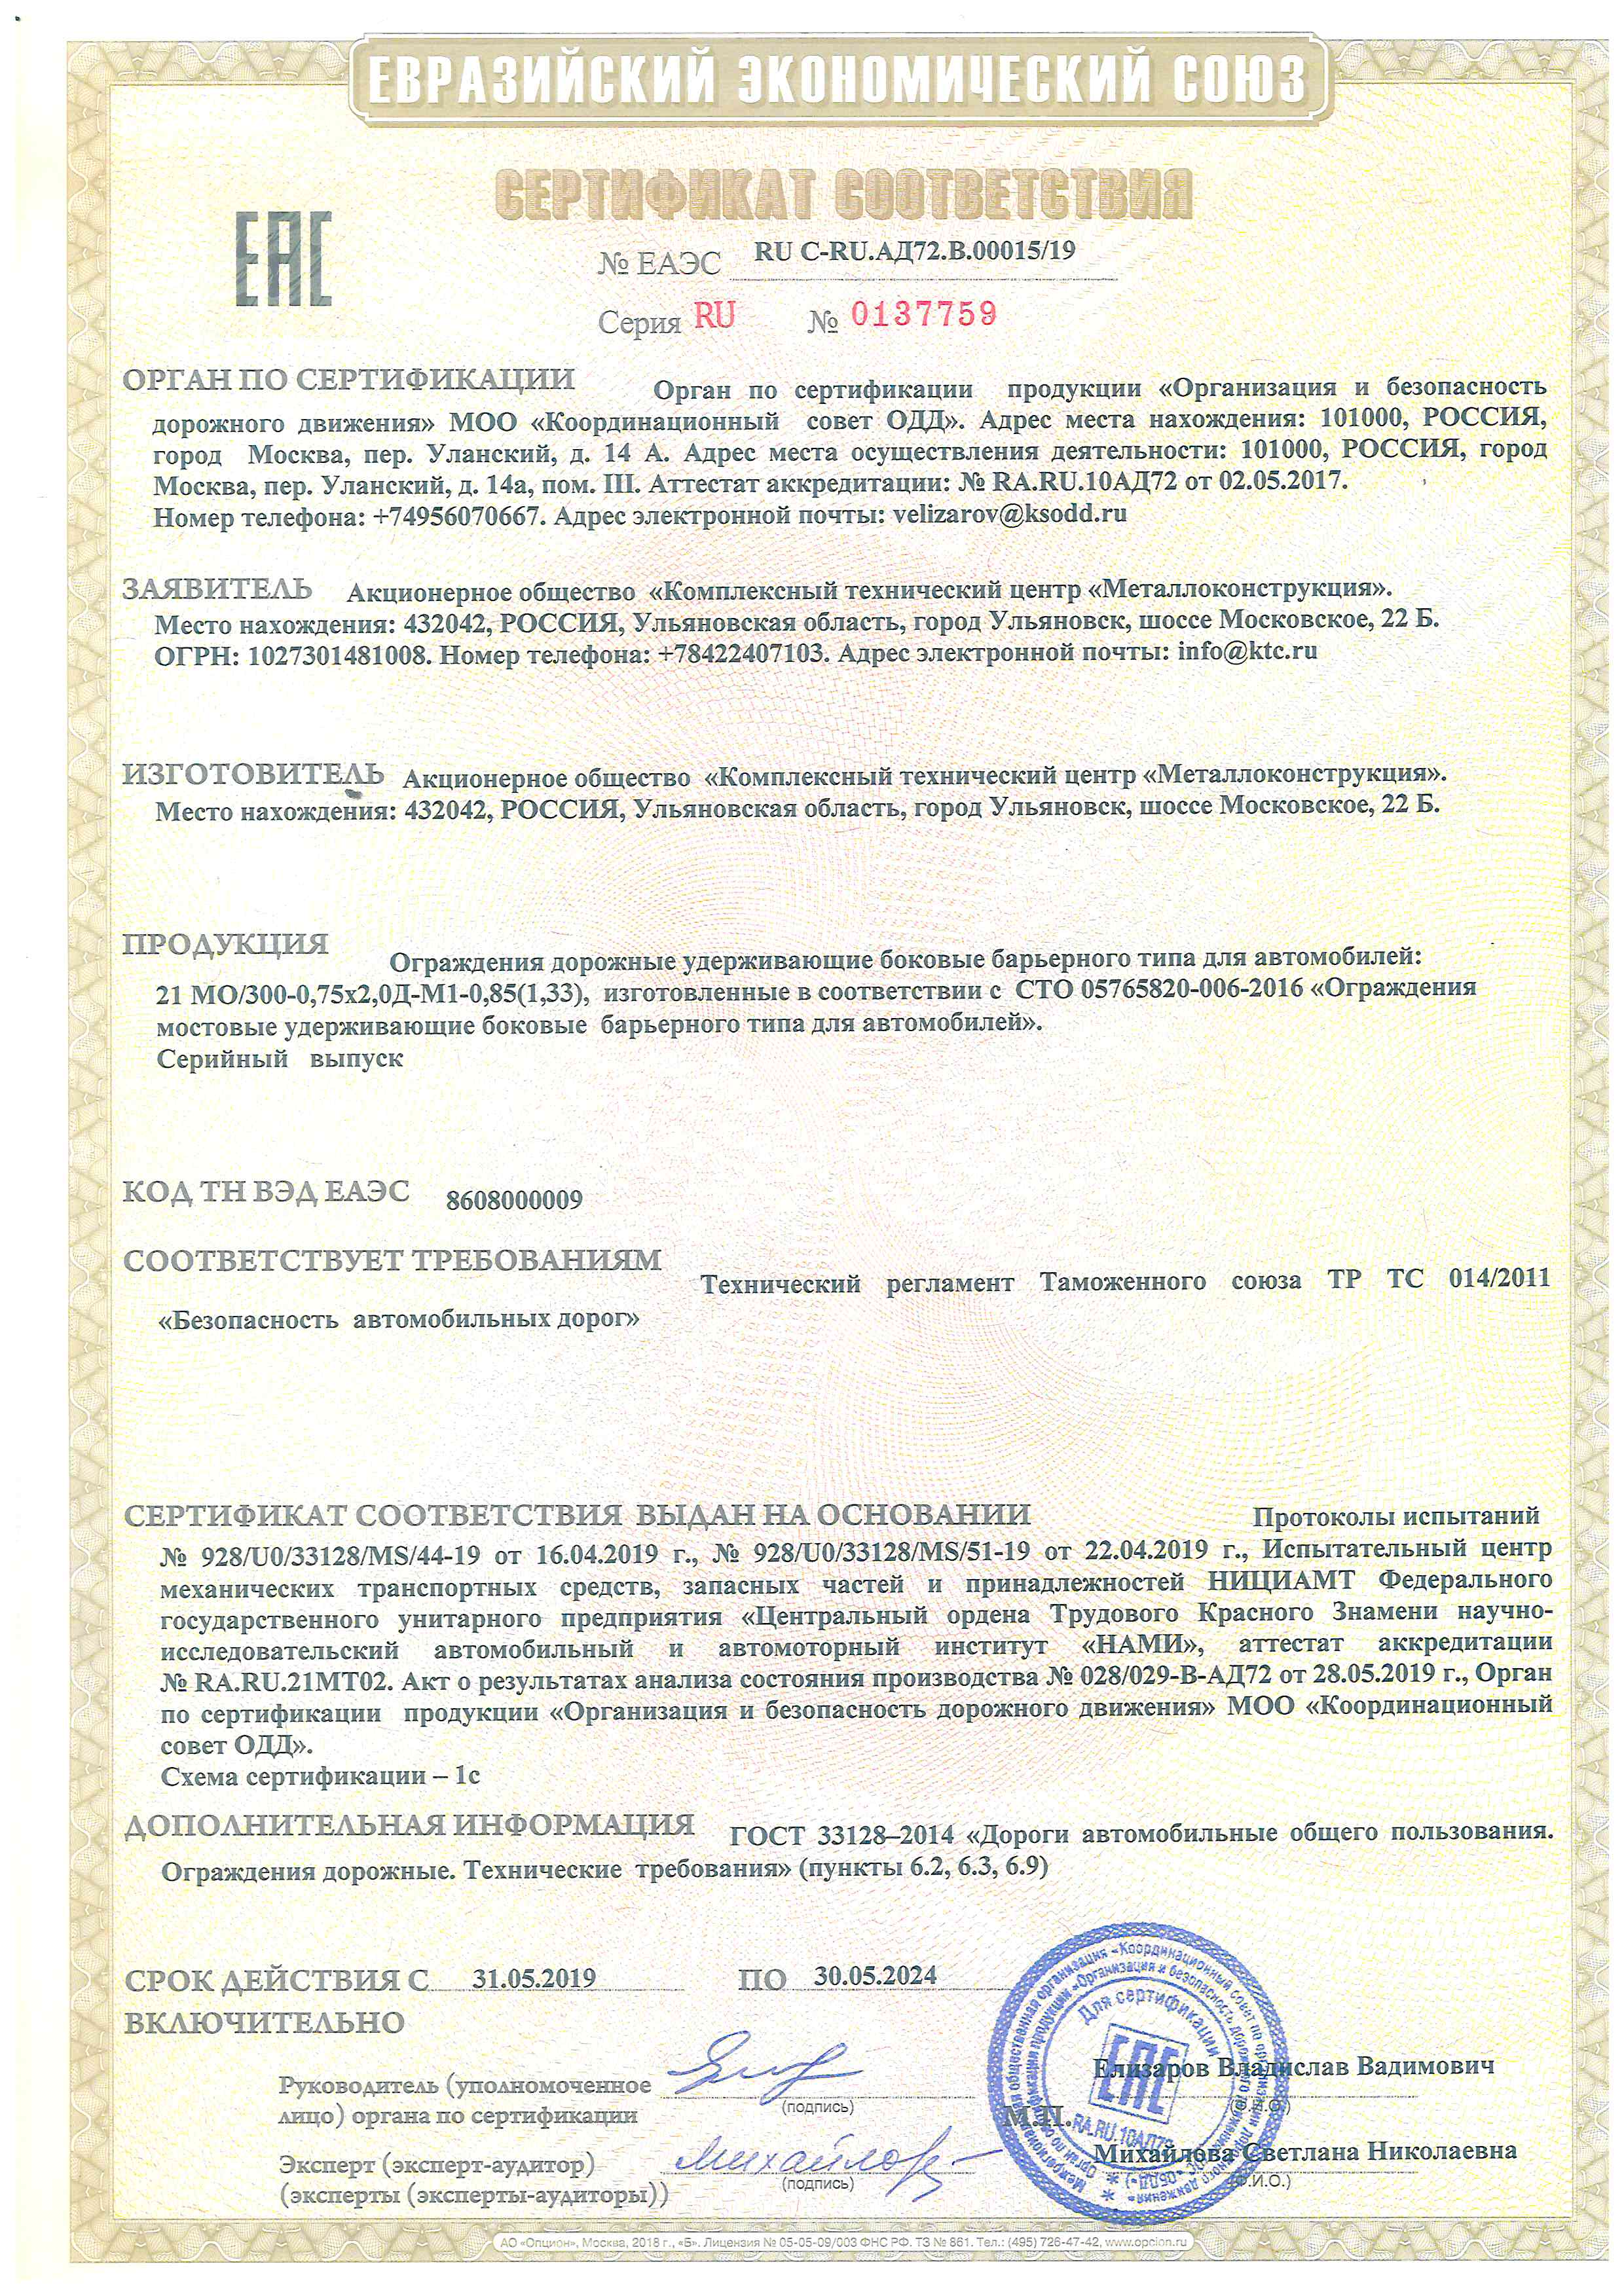 сертификат соответствия ТР ТС 014-2011 RU C-RU.АД72.В.00015-19